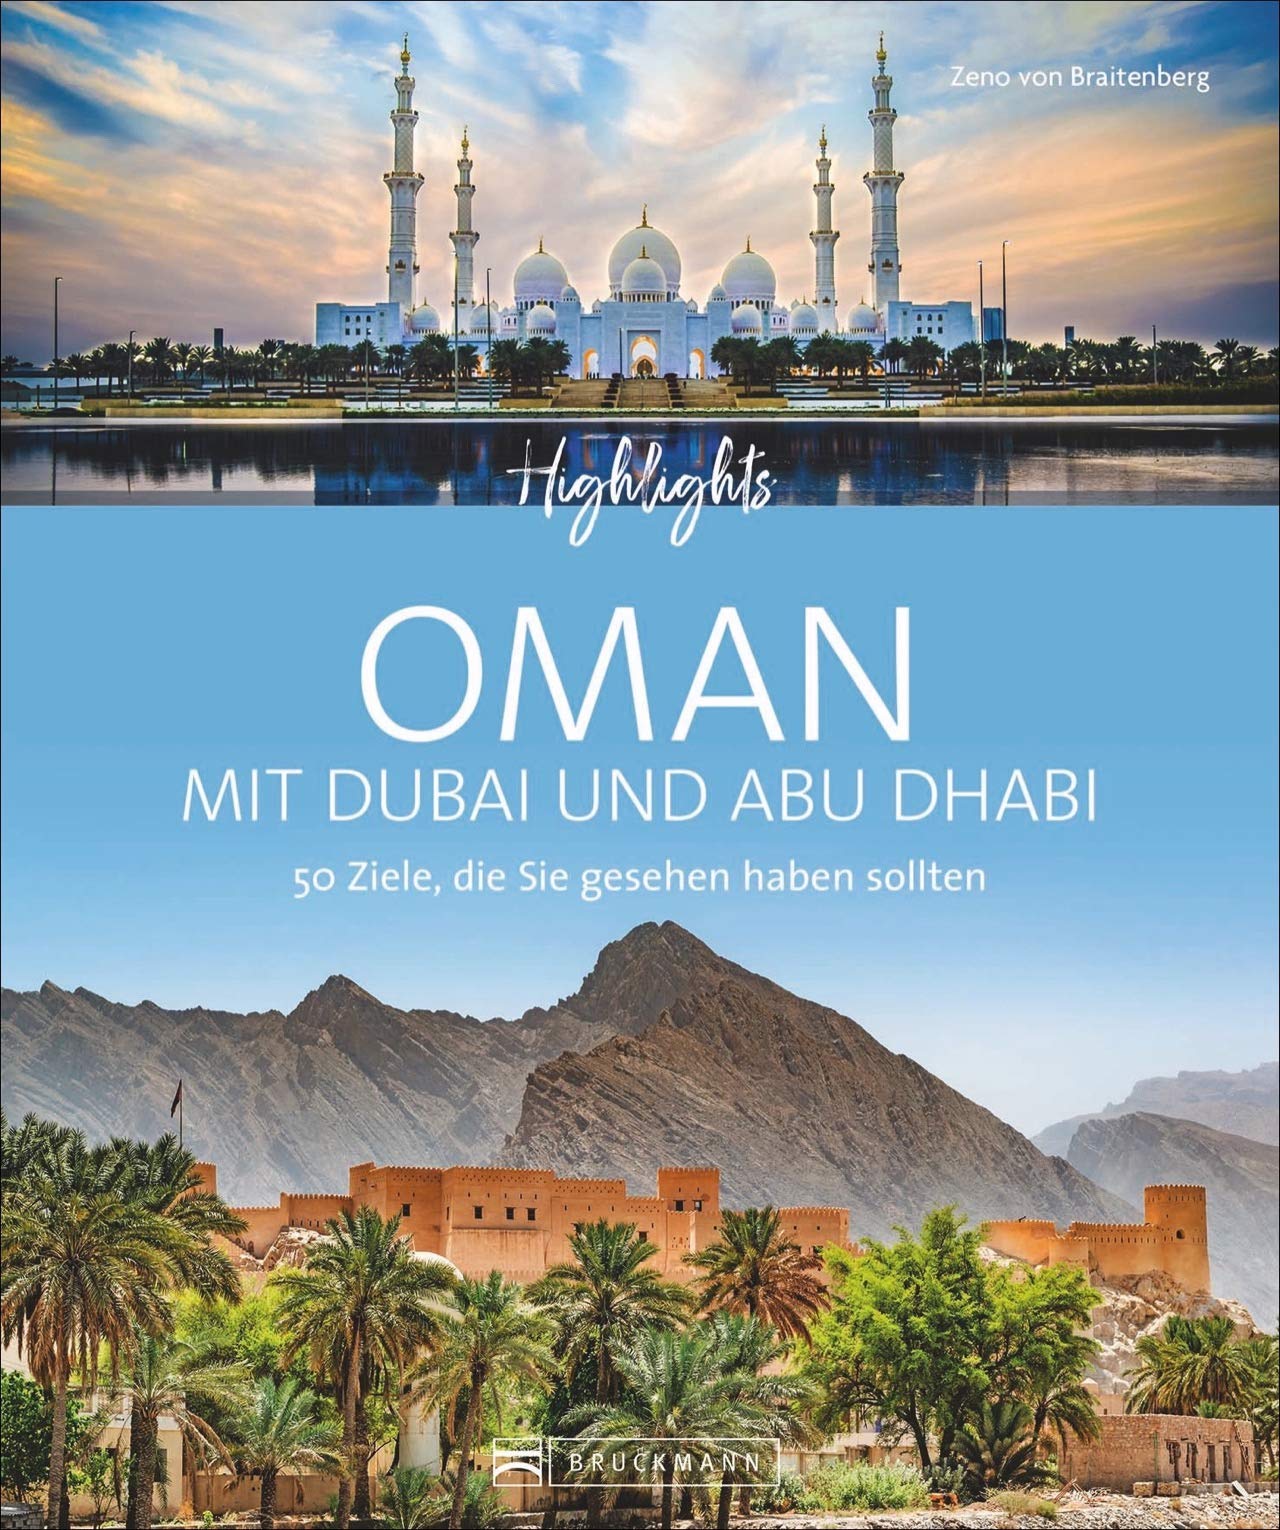 oman tour from abu dhabi